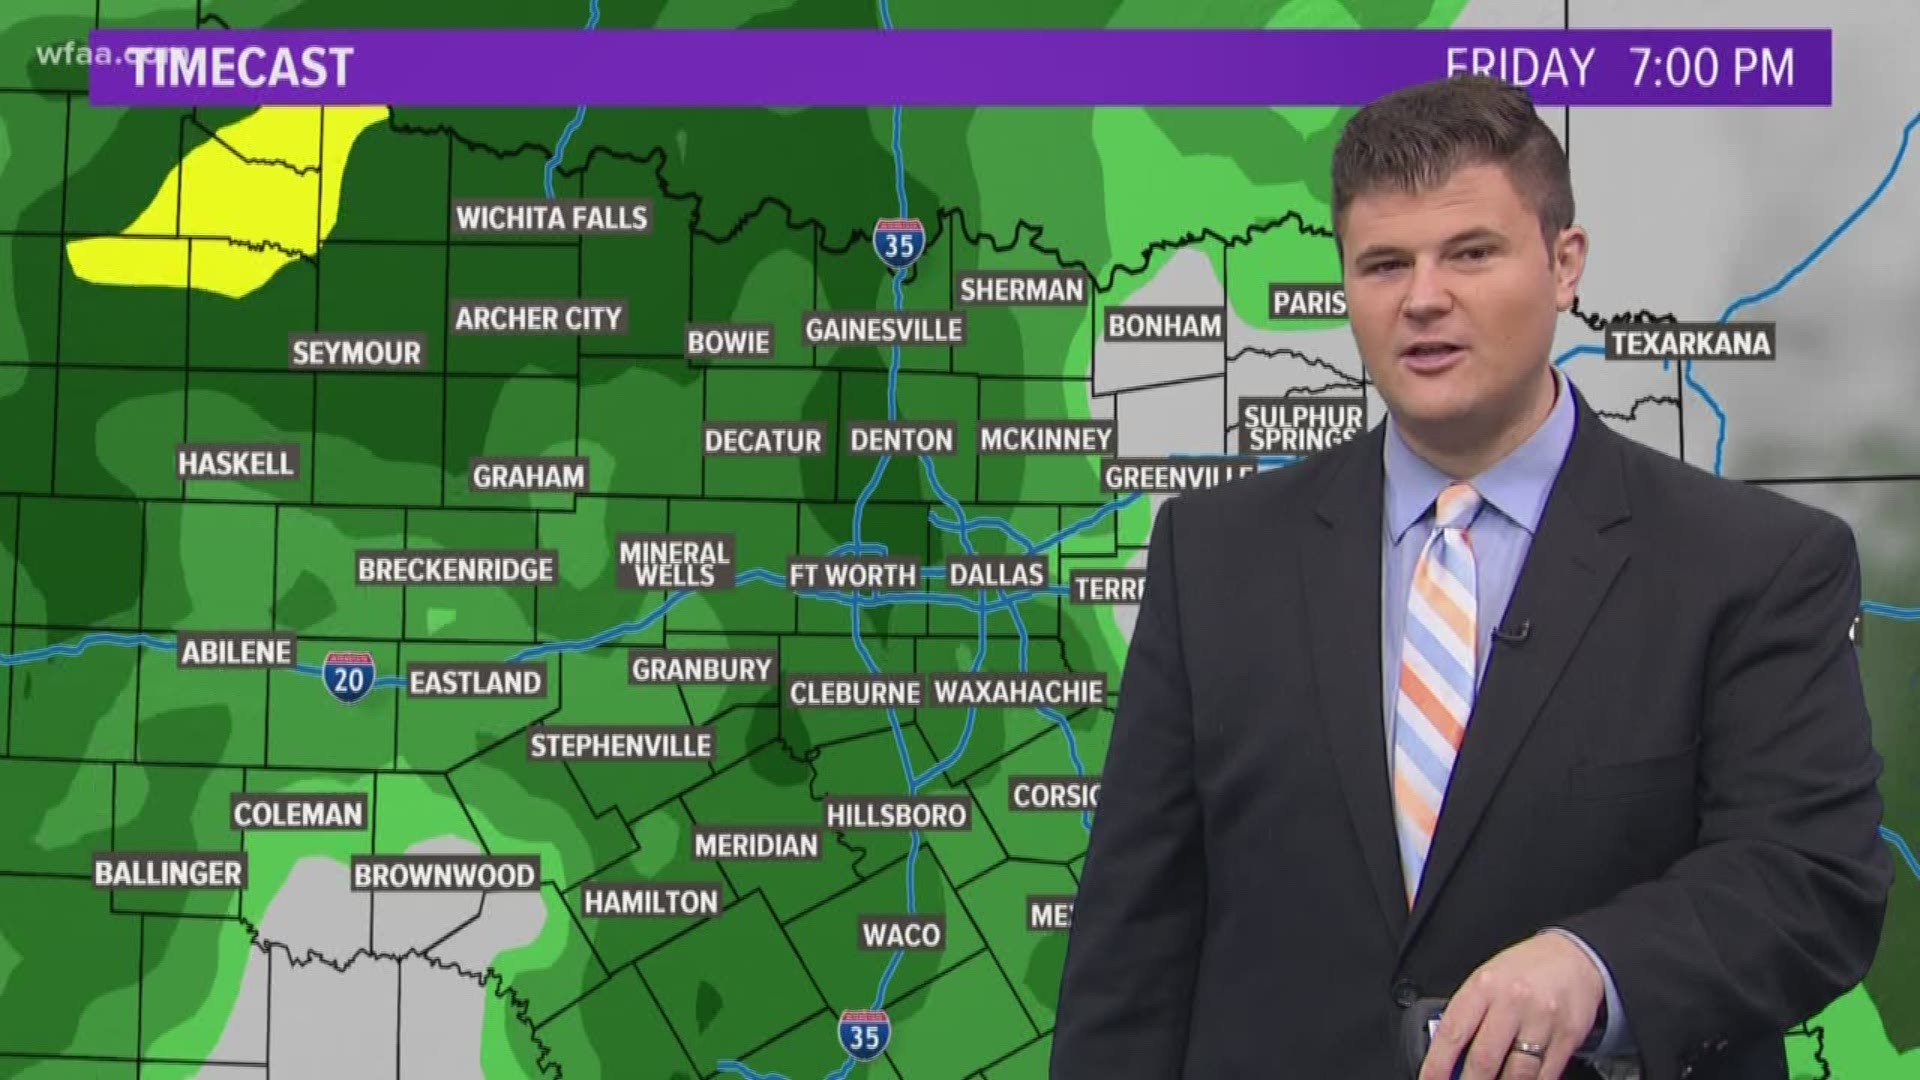 Jesse Hawila has the latest on a rainy weekend forecast across DFW.